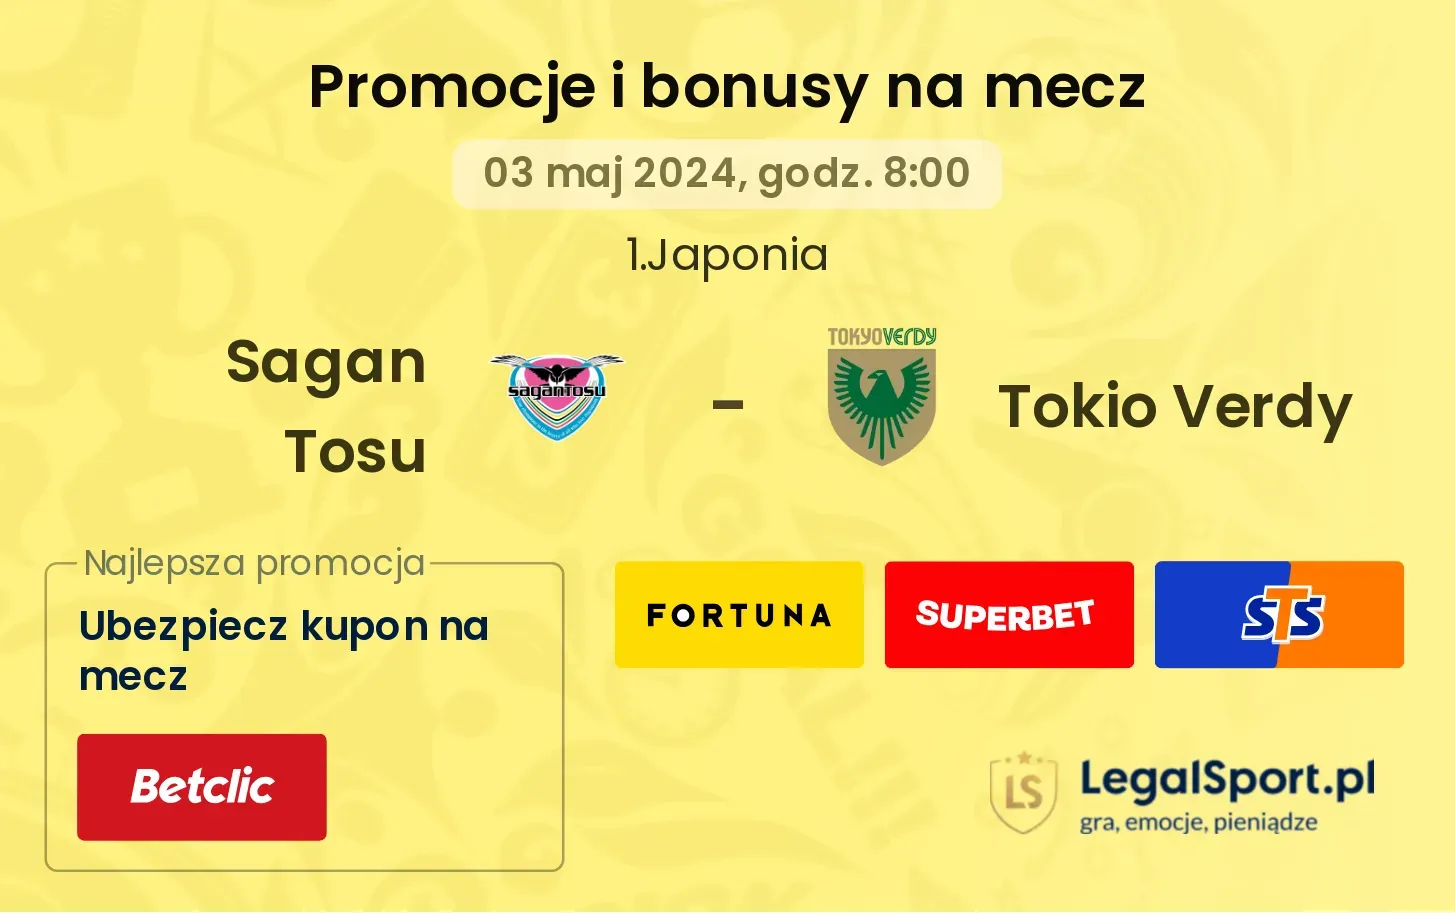 Sagan Tosu - Tokio Verdy promocje bonusy na mecz